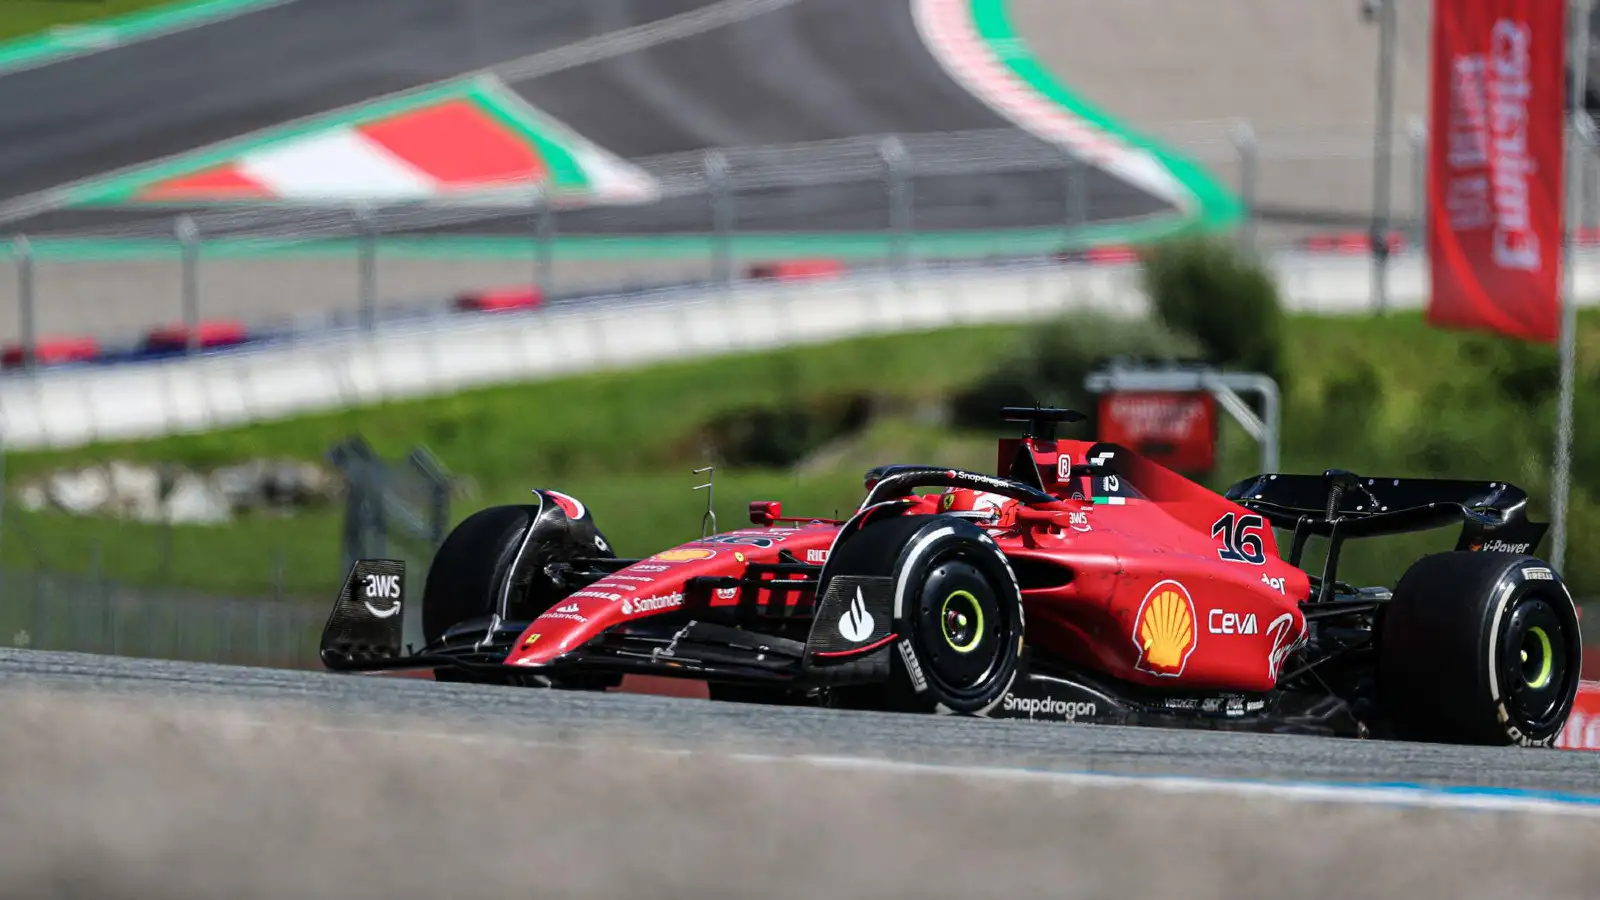 Ferrari's Charles Leclerc on track at the Austrian Grand Prix. Spielberg, July 2022.